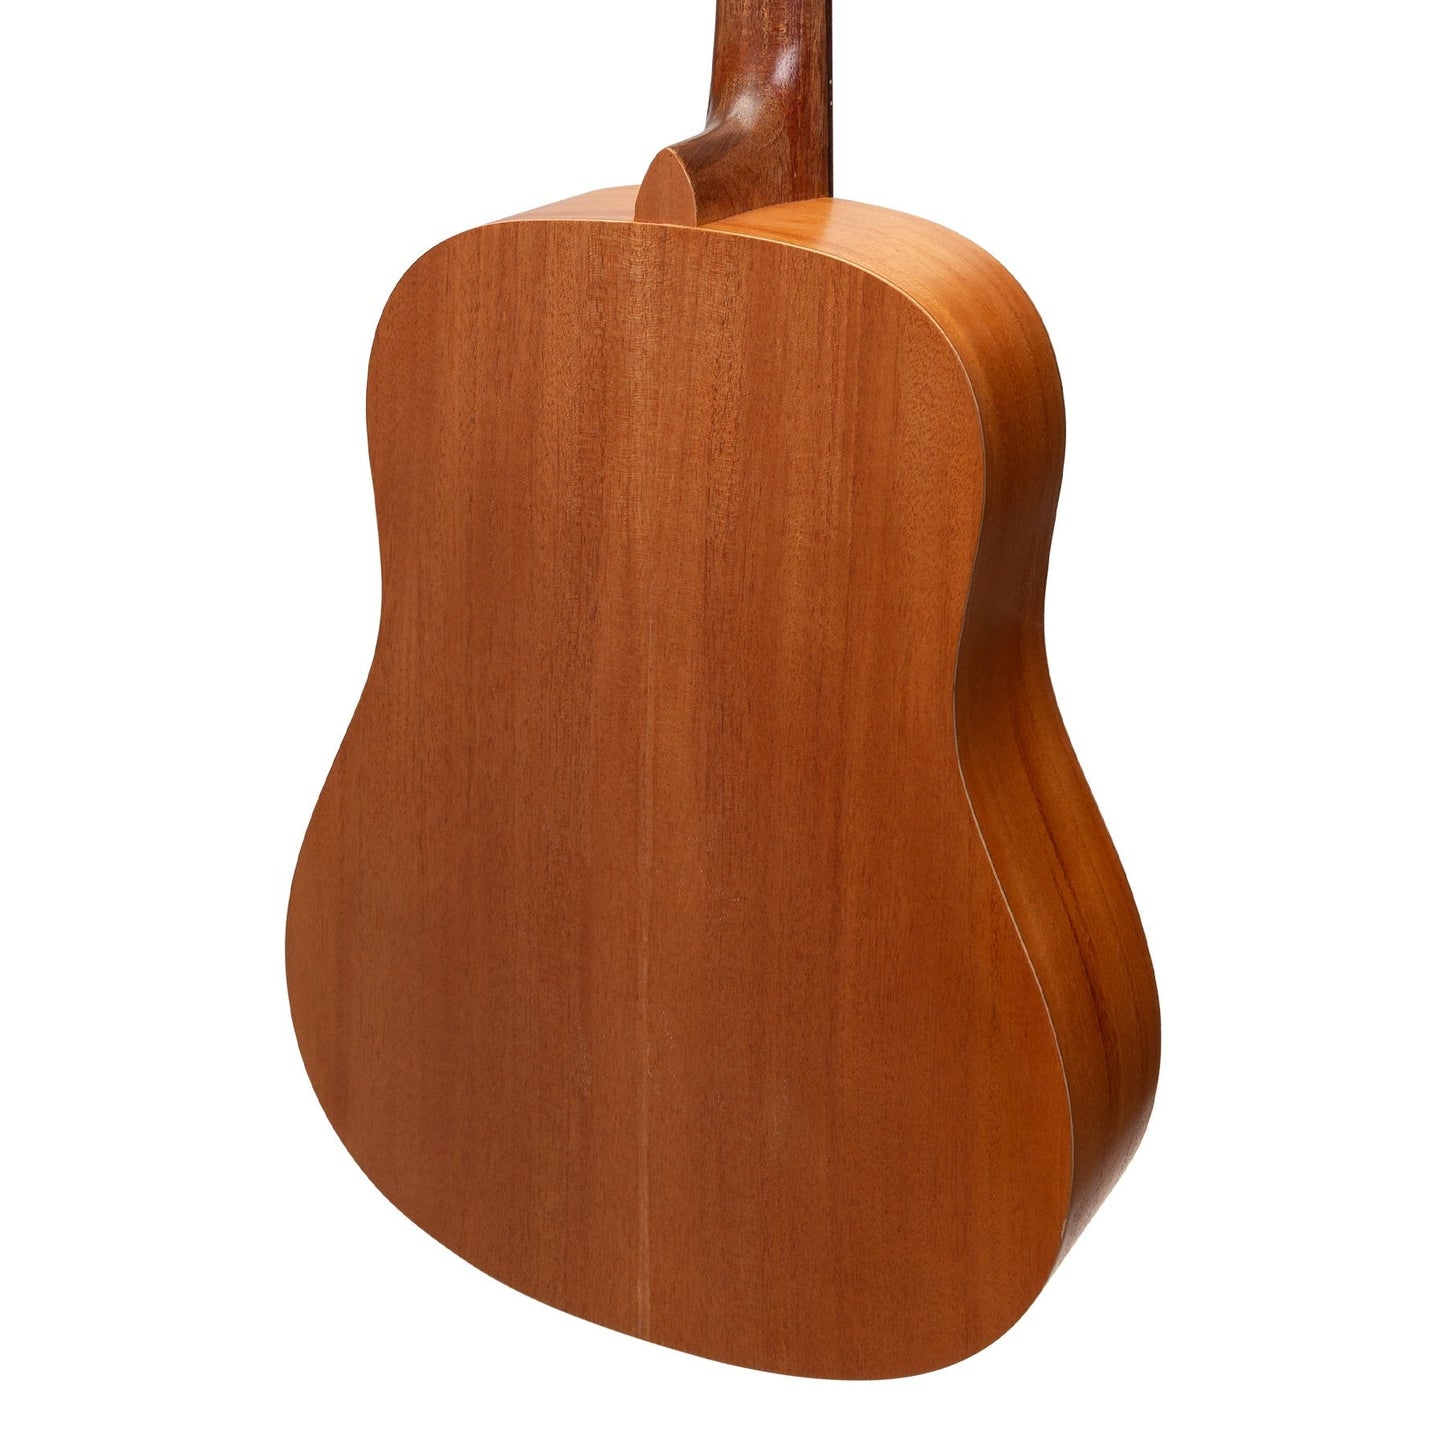 Martinez Acoustic Middy Traveller Guitar (Mahogany)